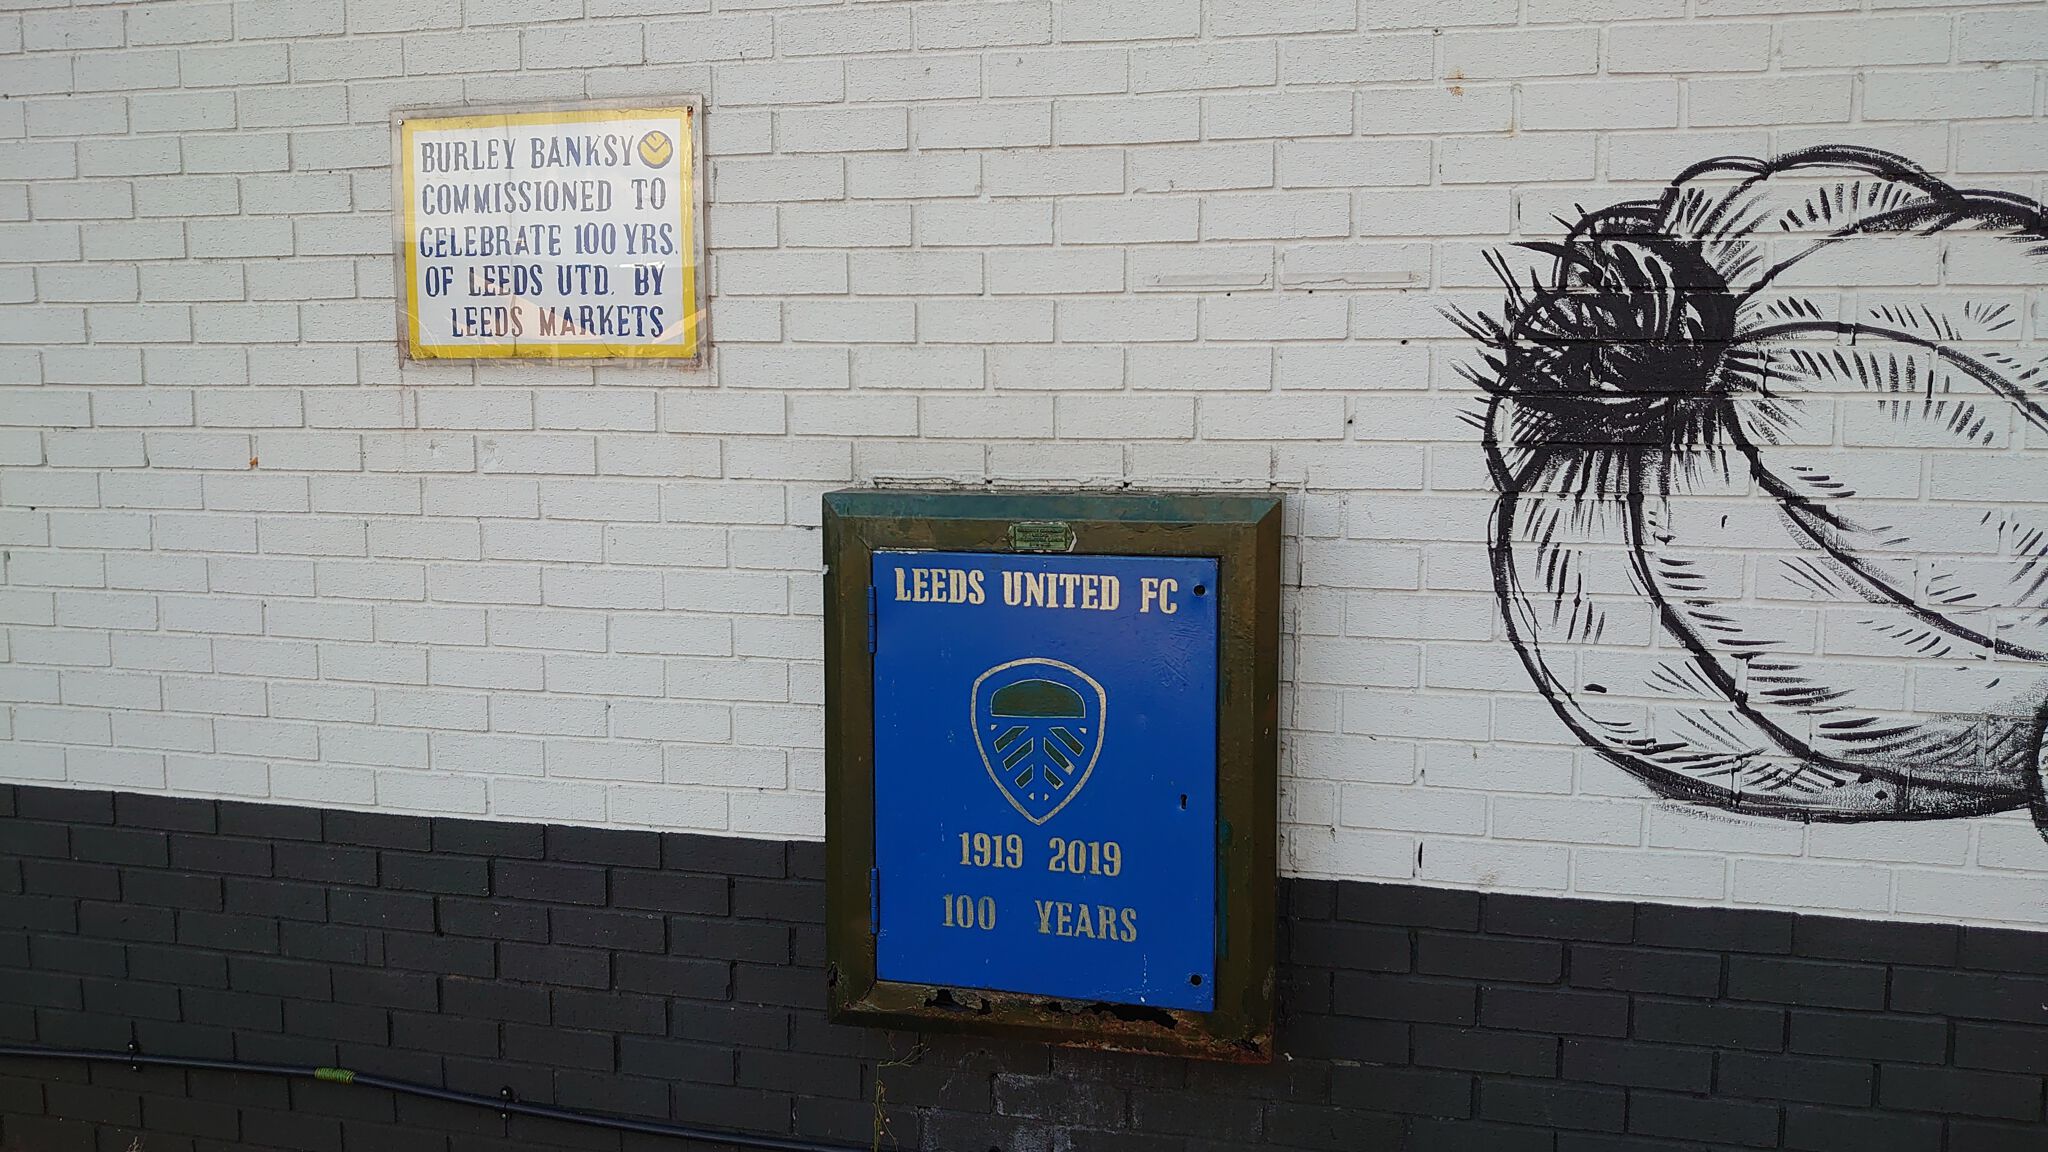 Burley Banksy (Andy McVeigh)&mdash;Leeds United 100 Years